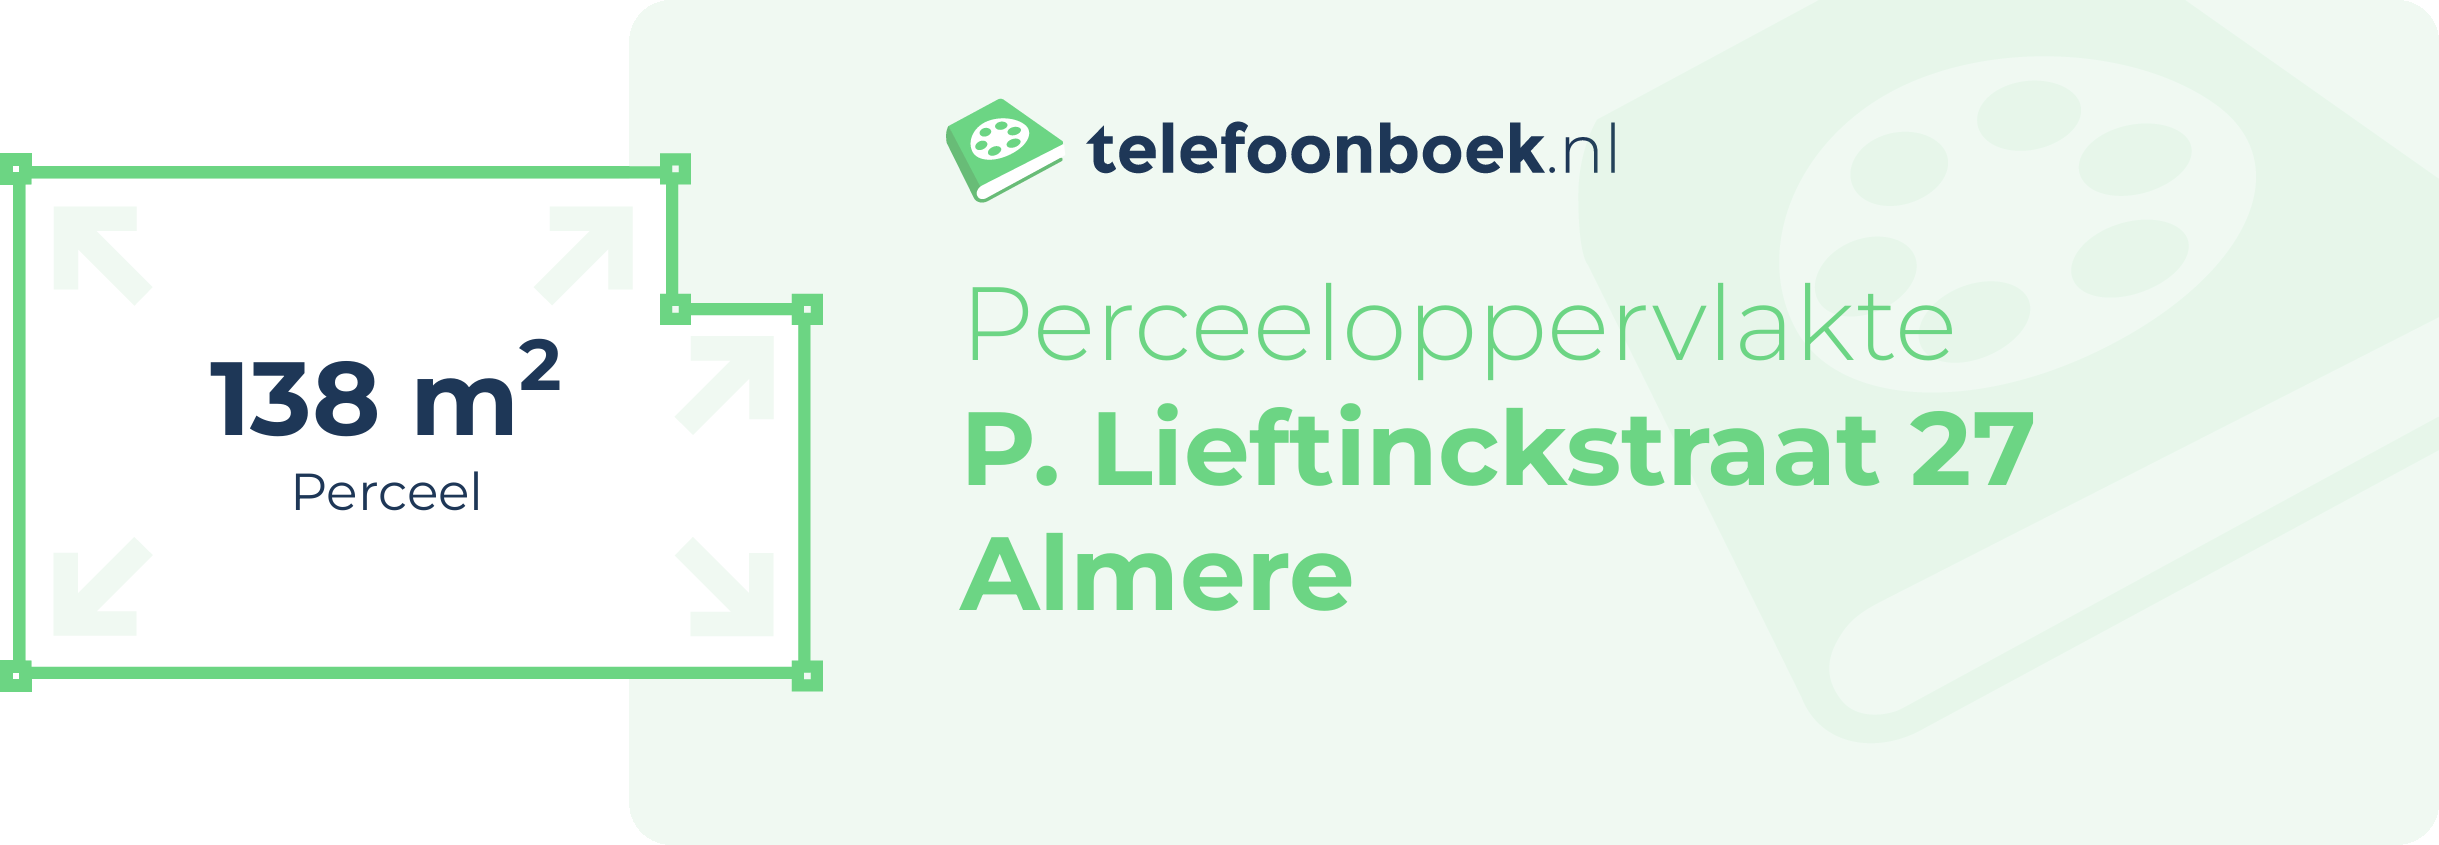 Perceeloppervlakte P. Lieftinckstraat 27 Almere